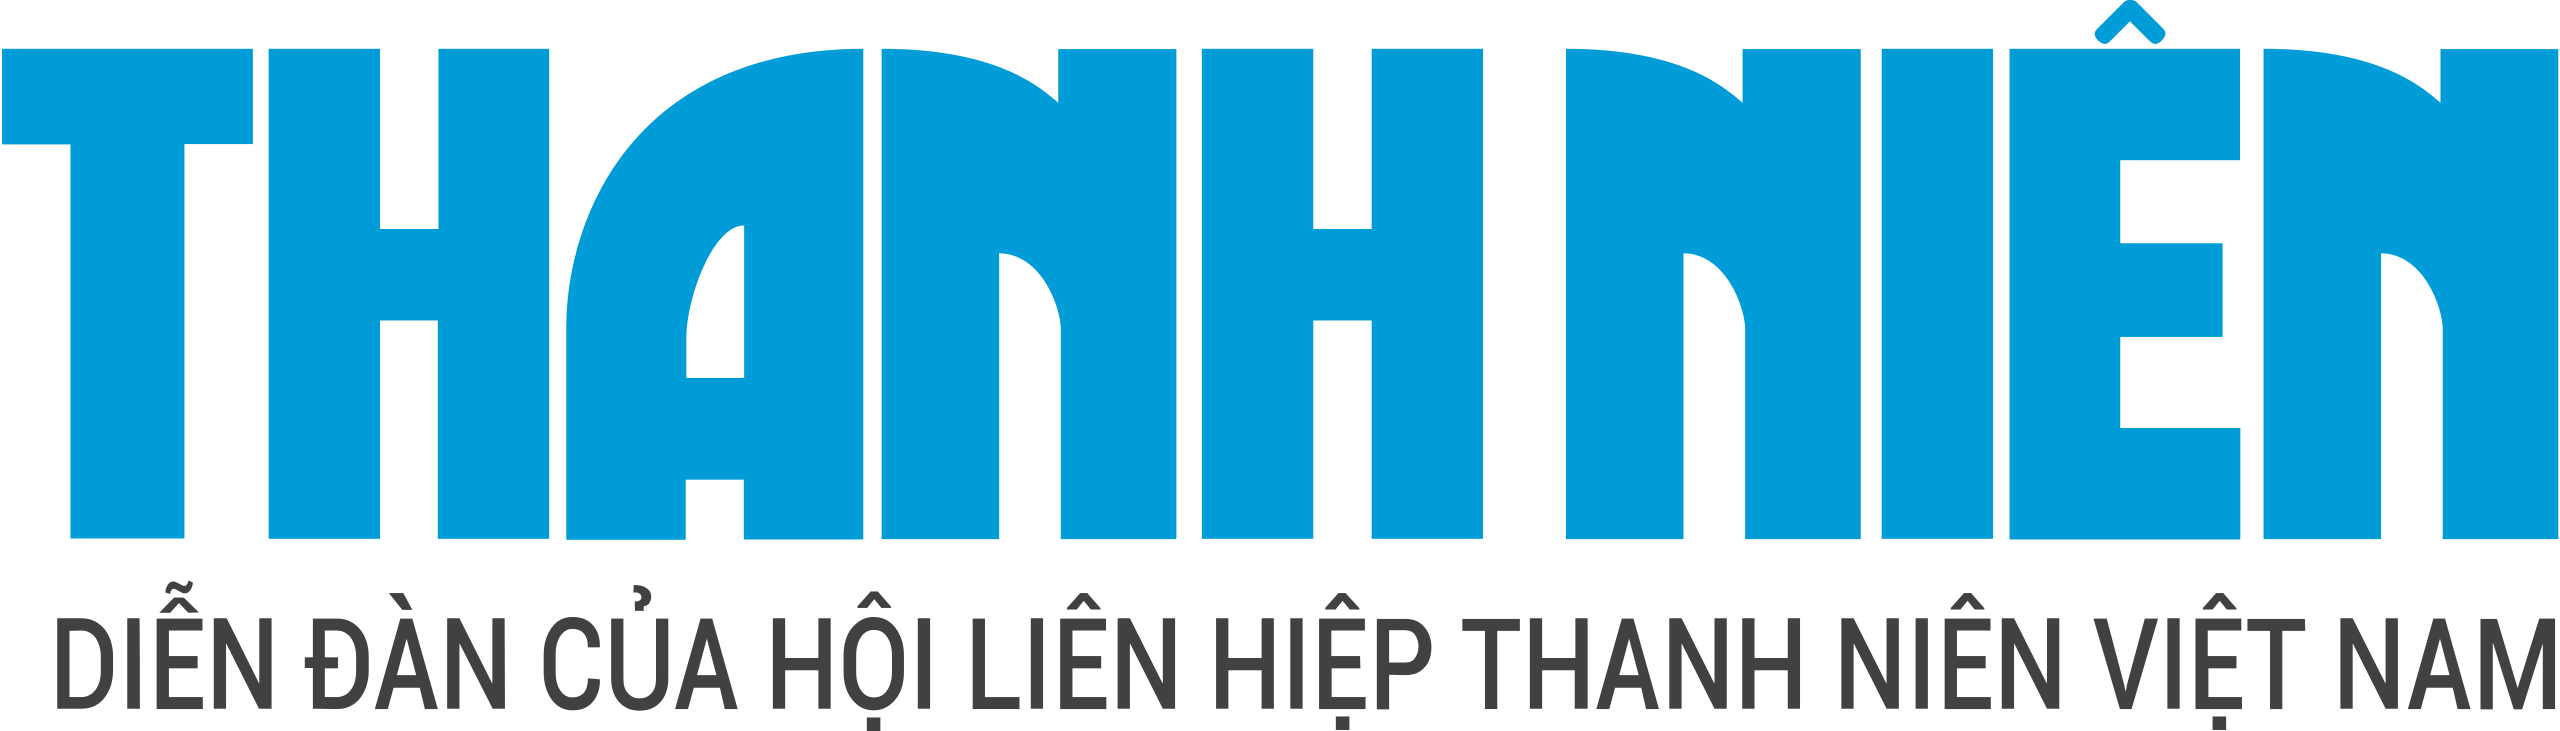 File:Thanh Niên logo.svg - Wikipedia